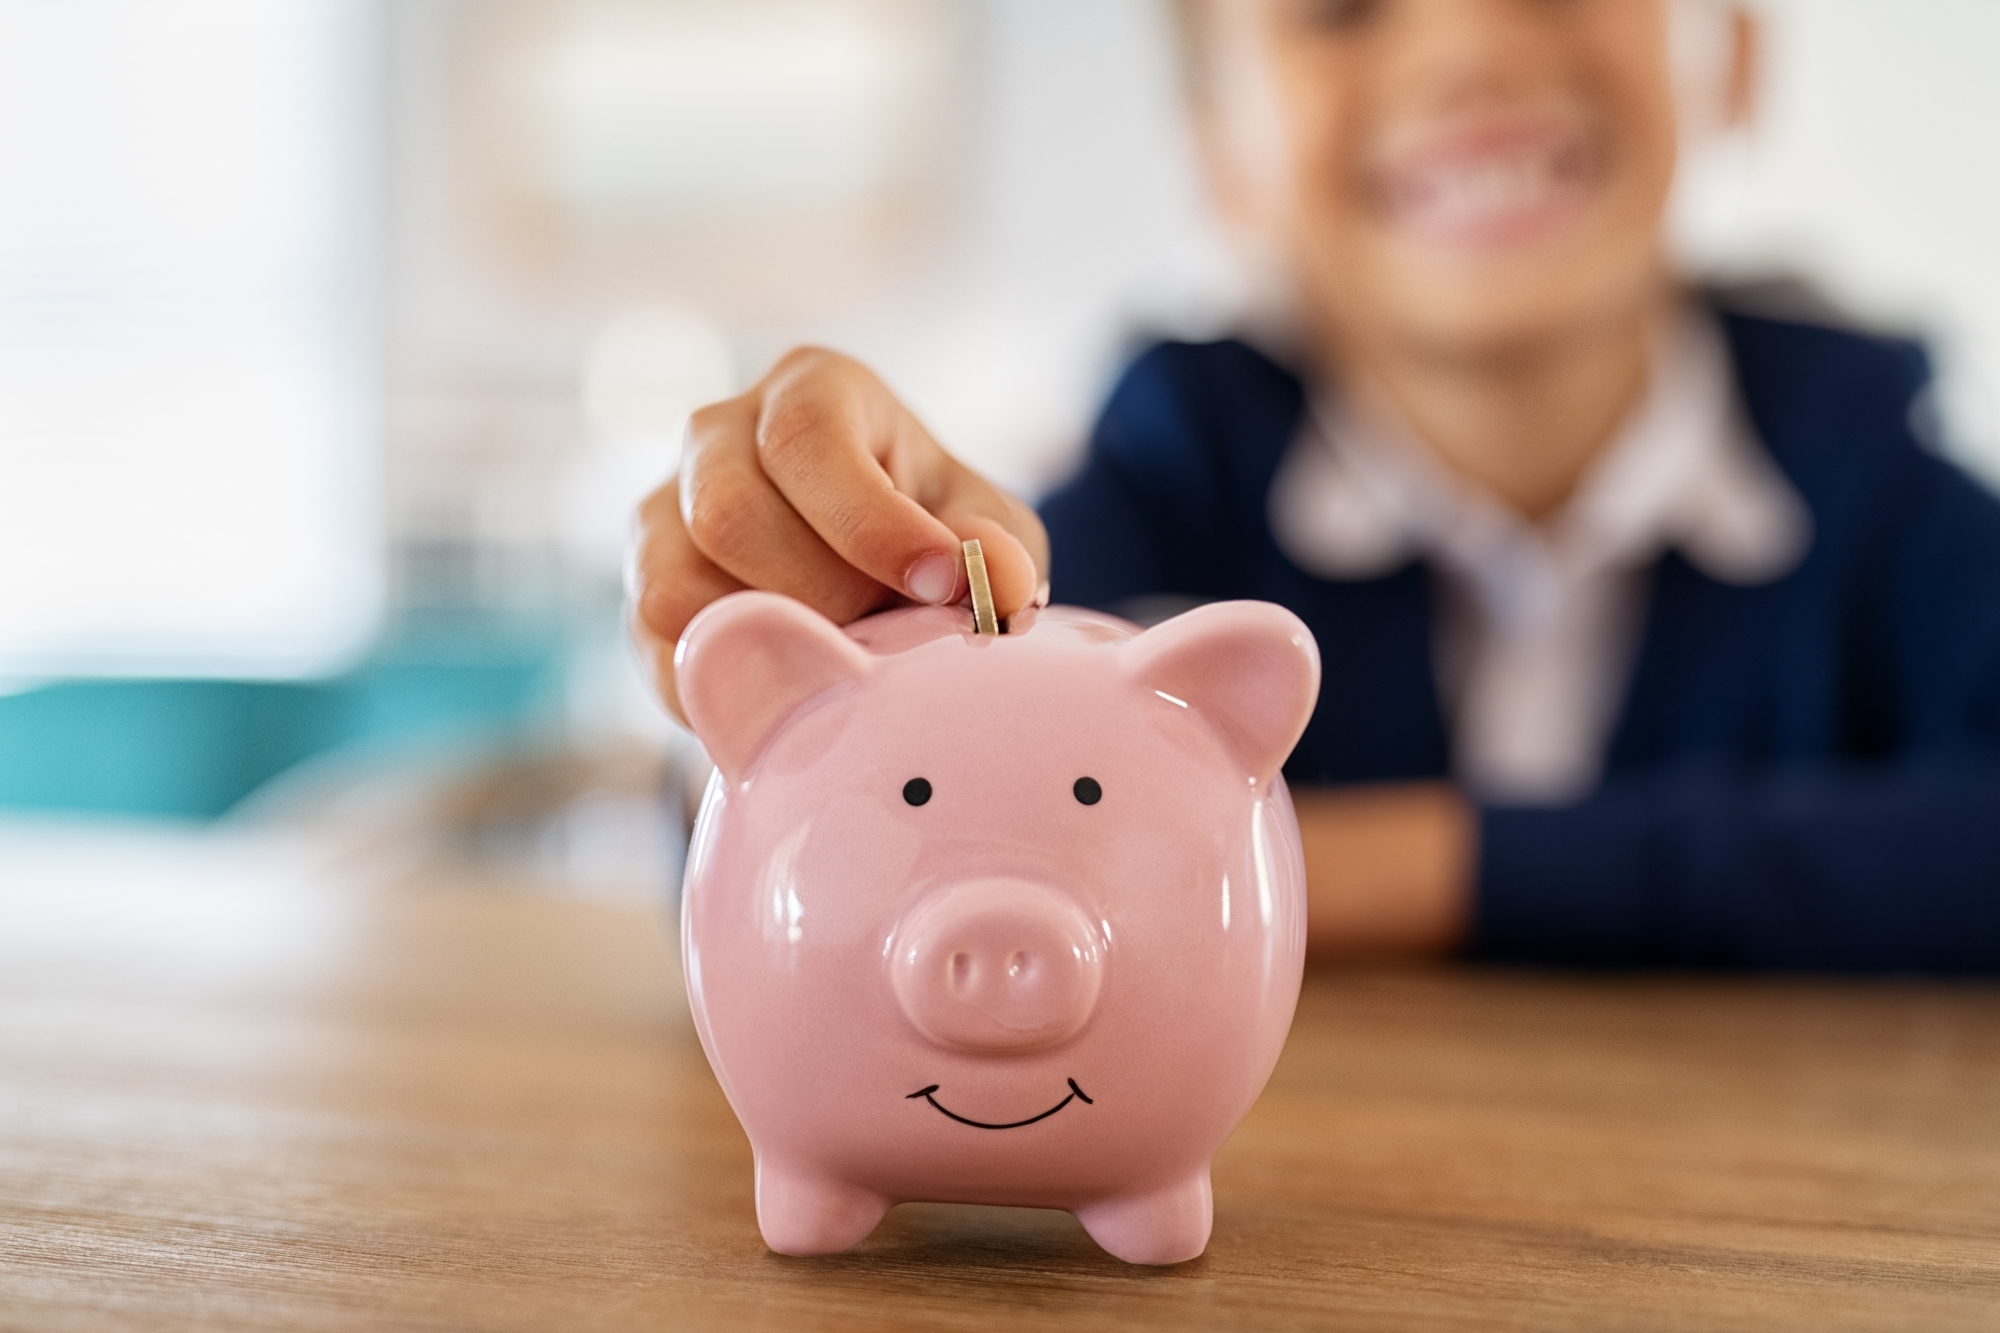 School child saving money in a piggy bank